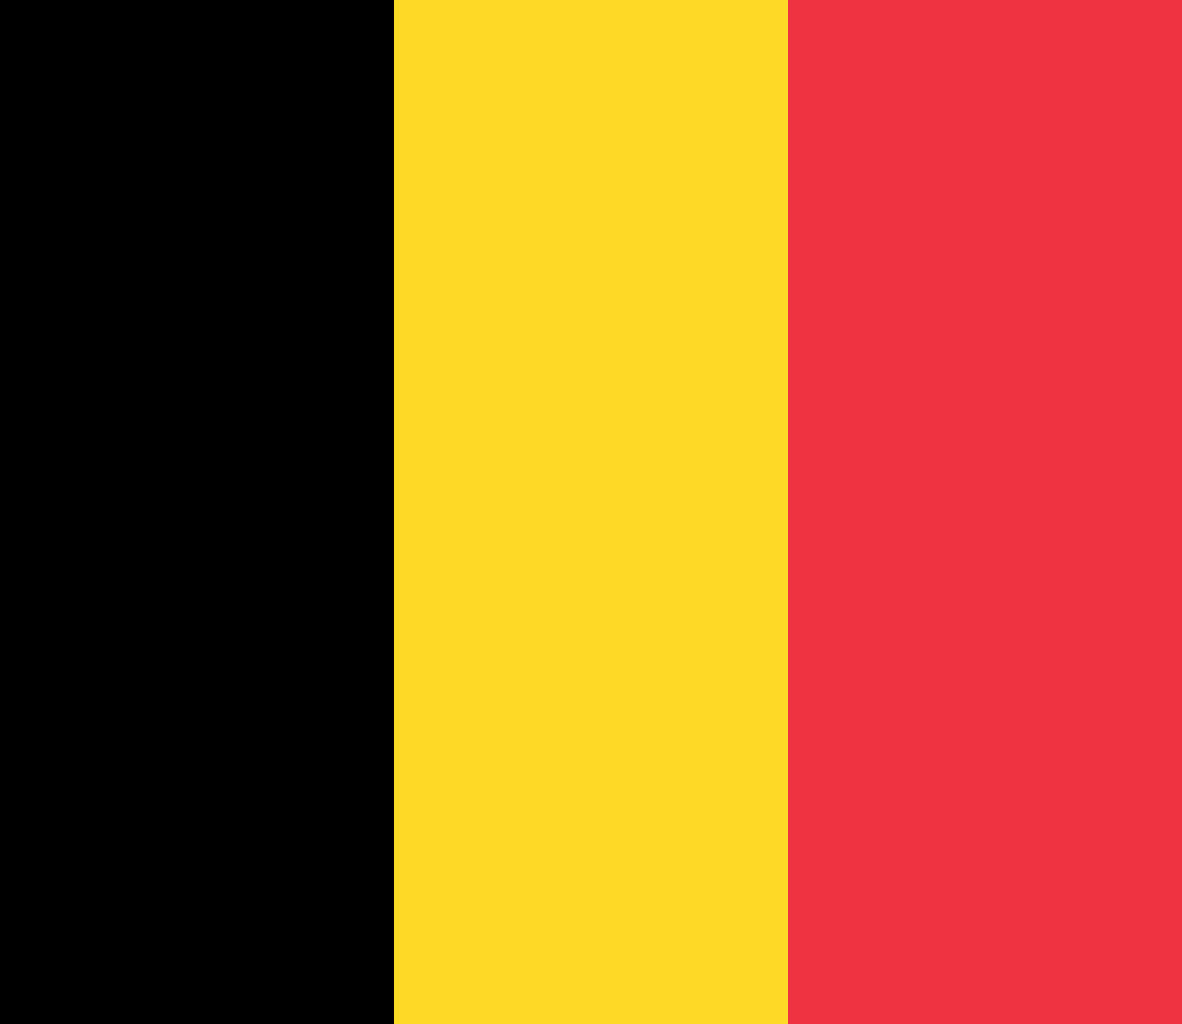 bandera_belgica